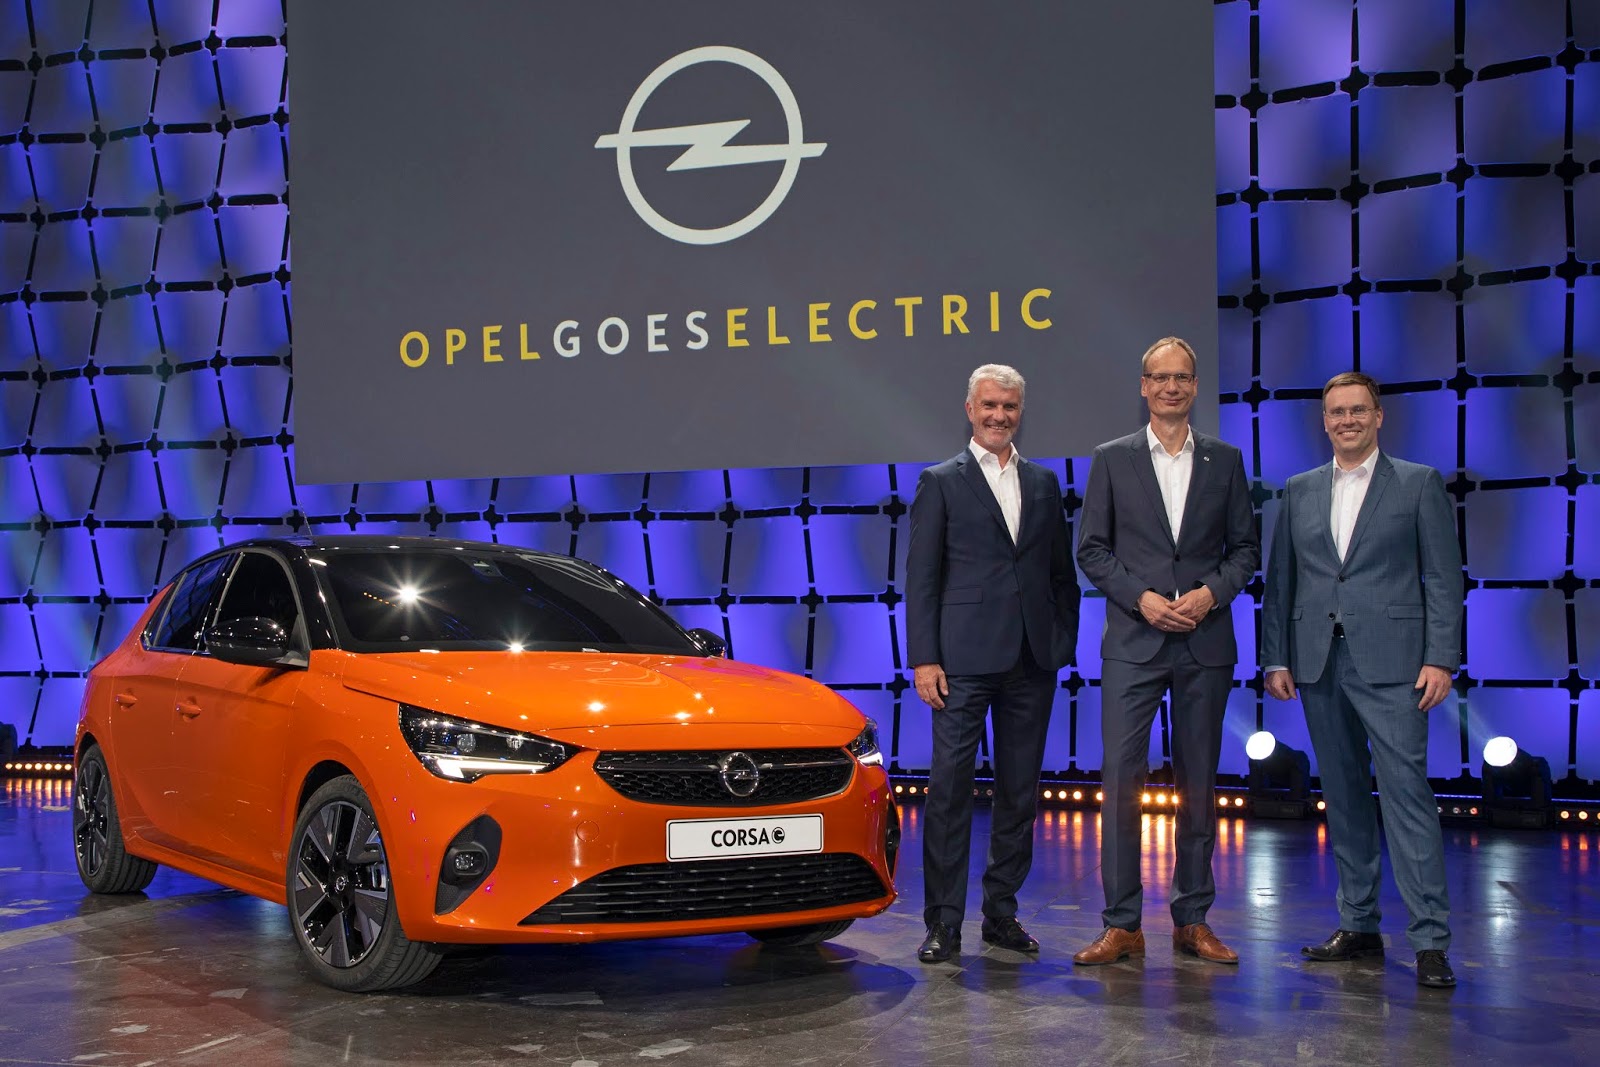 2019 Opel goes Electric Adams Lohscheller Mueller 507076 Το νέο Opel Corsa-e με αυτονομία έως 330 km και 136 ίππους